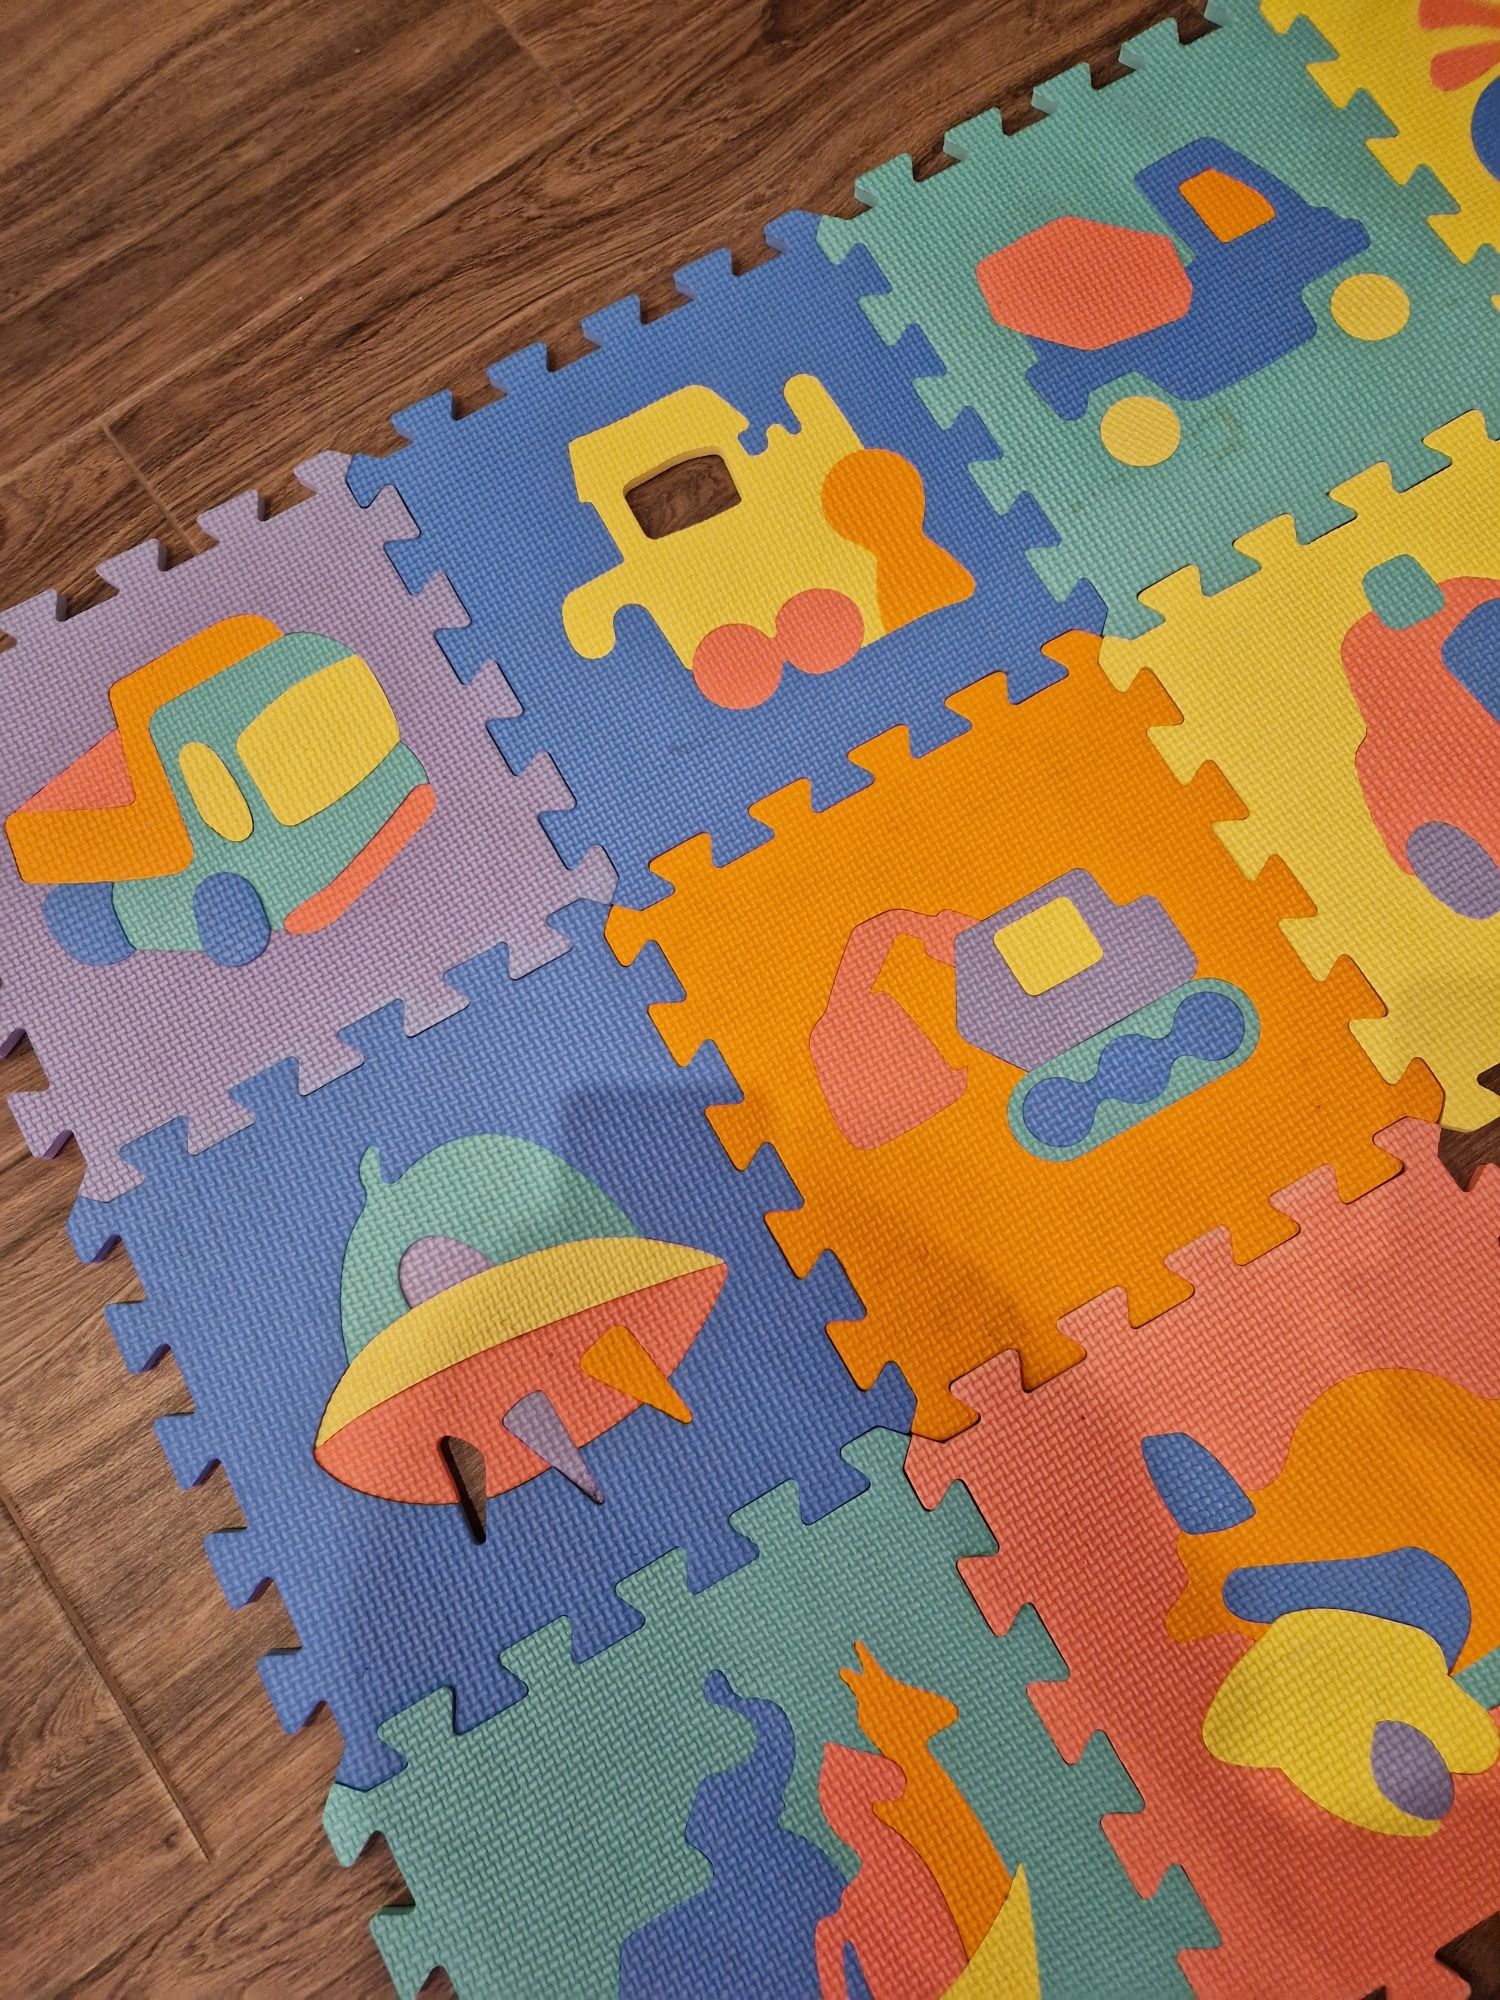 Puzle piankowe mata piankowa podłogowa zestaw puzzle